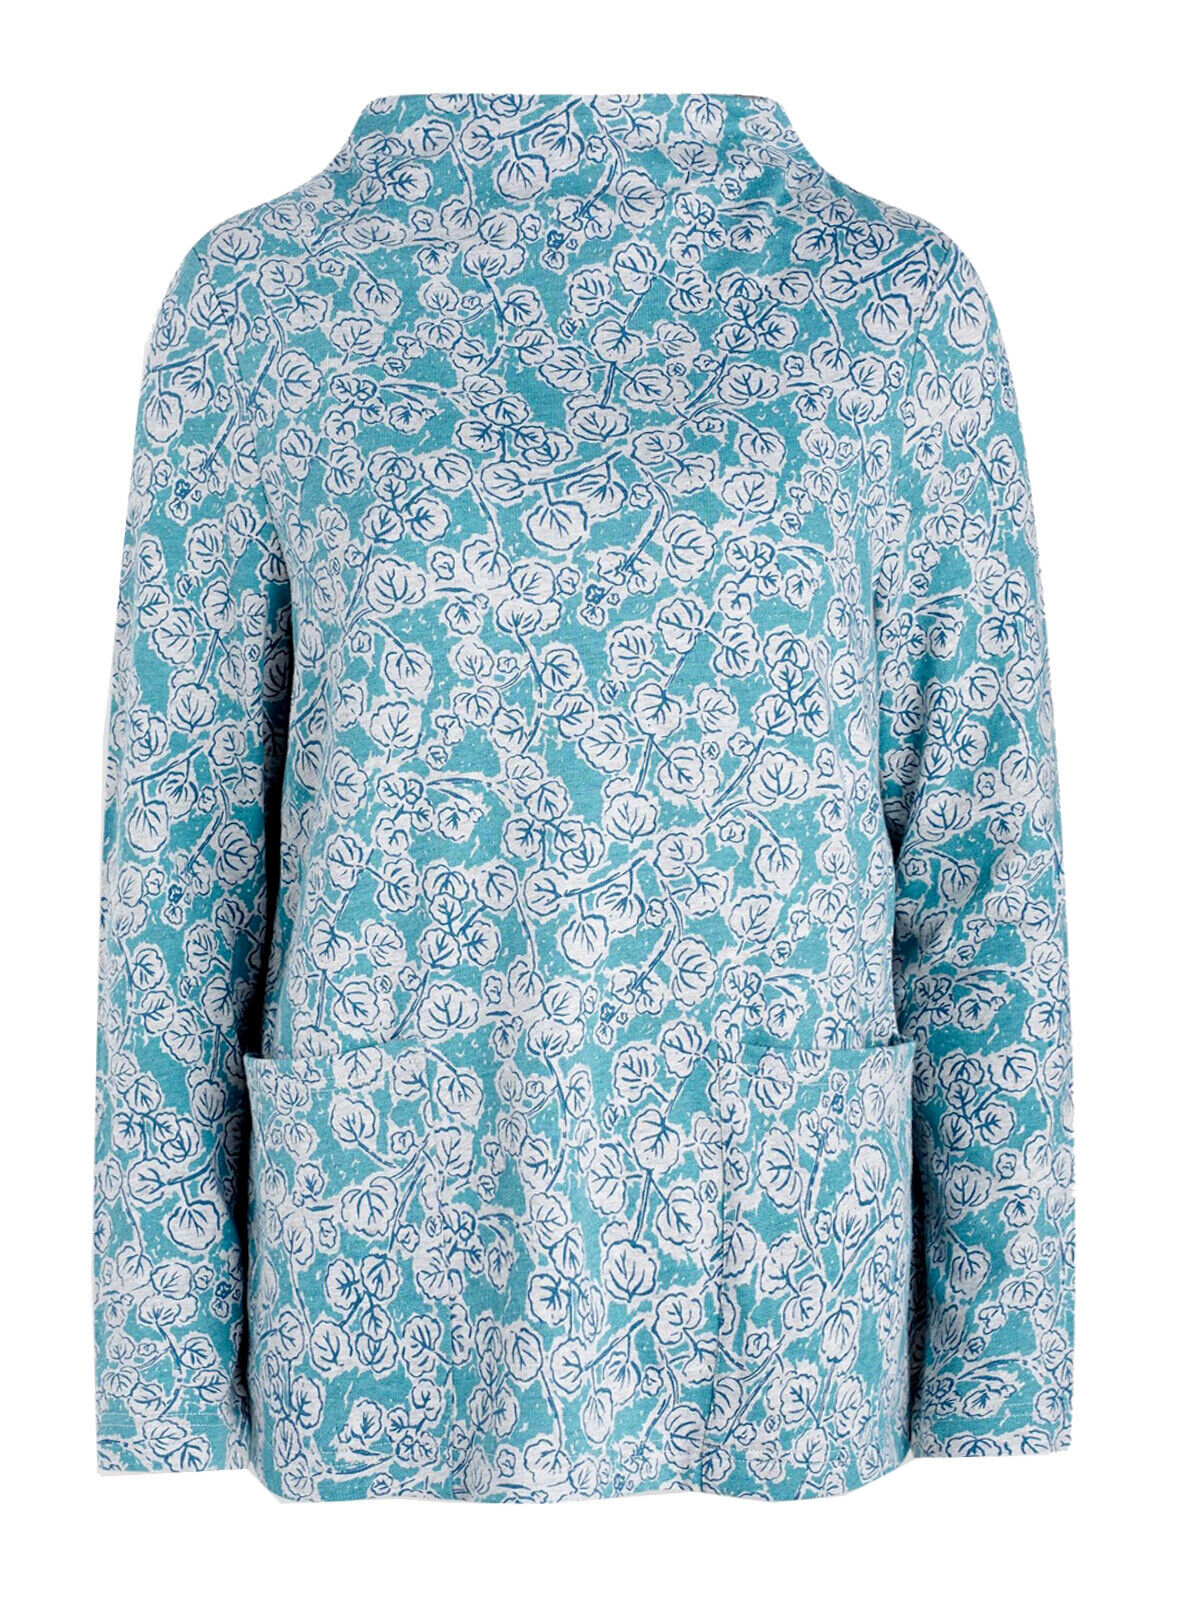 EX SEASALT Teal Trailing Vine Anchorage Oceangoing Sweatshirt in Size 10 RRP £45